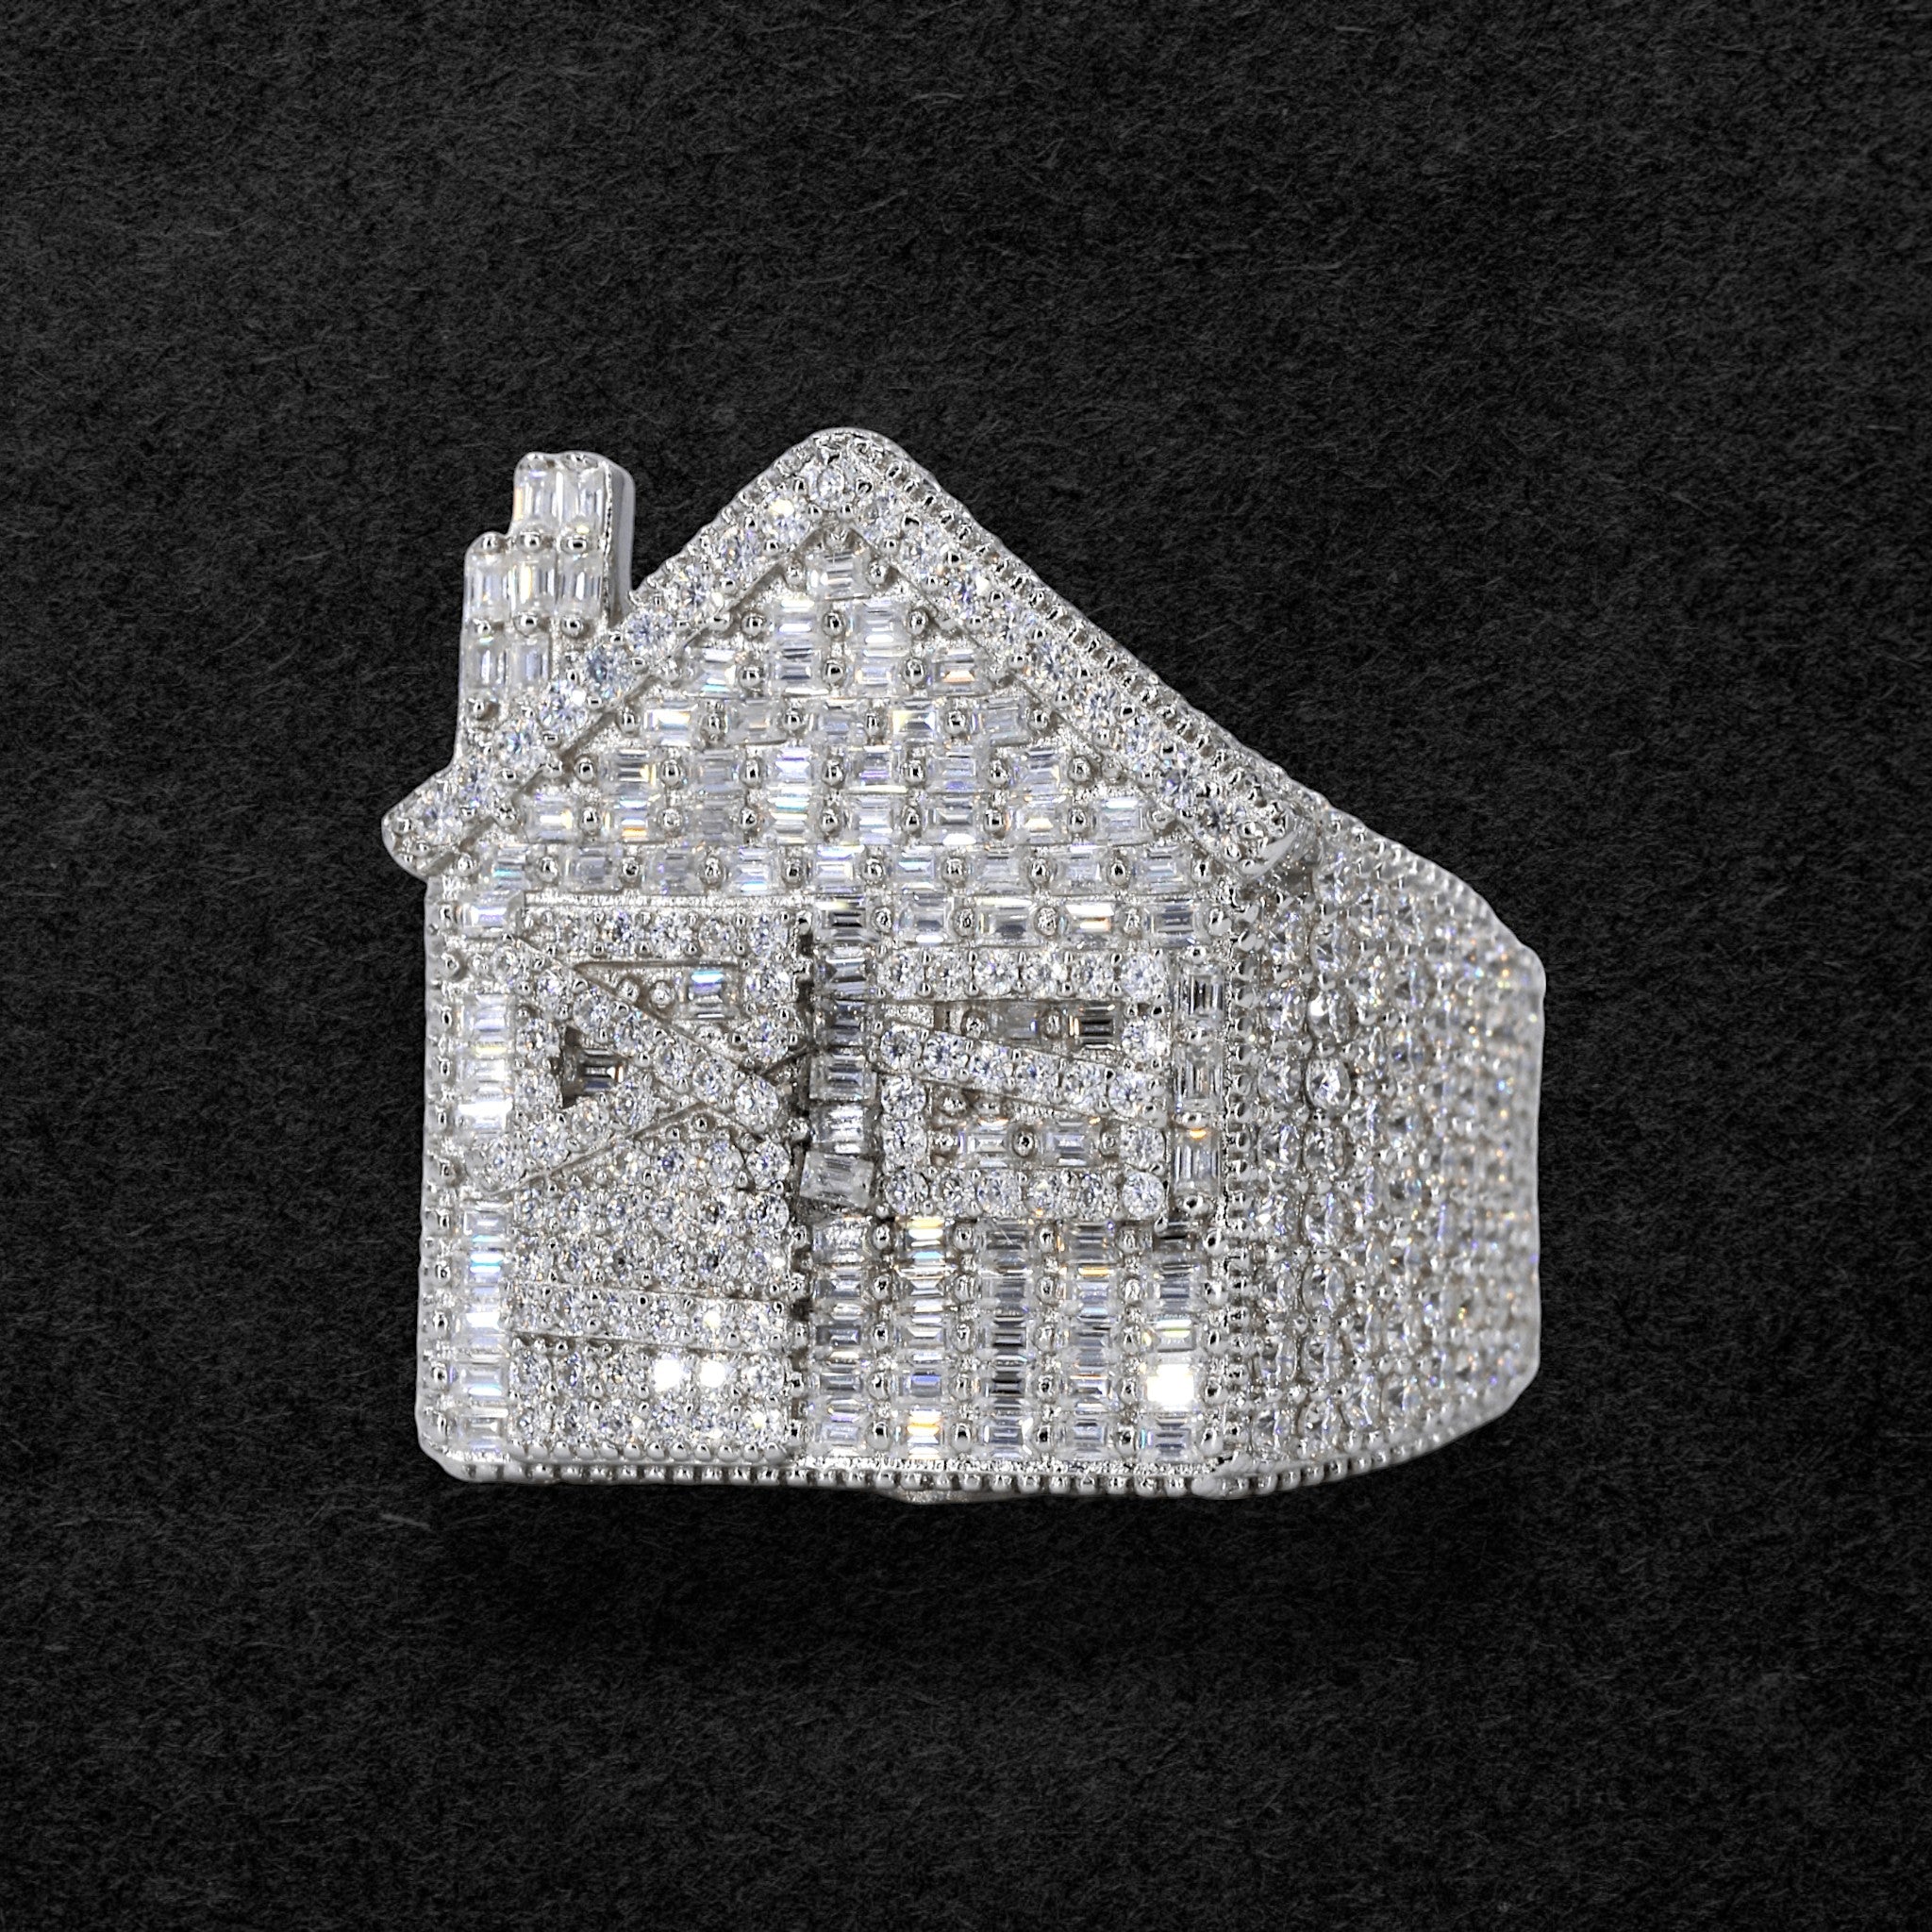 VVS Moissanite Diamond Ring: Trap House Edition